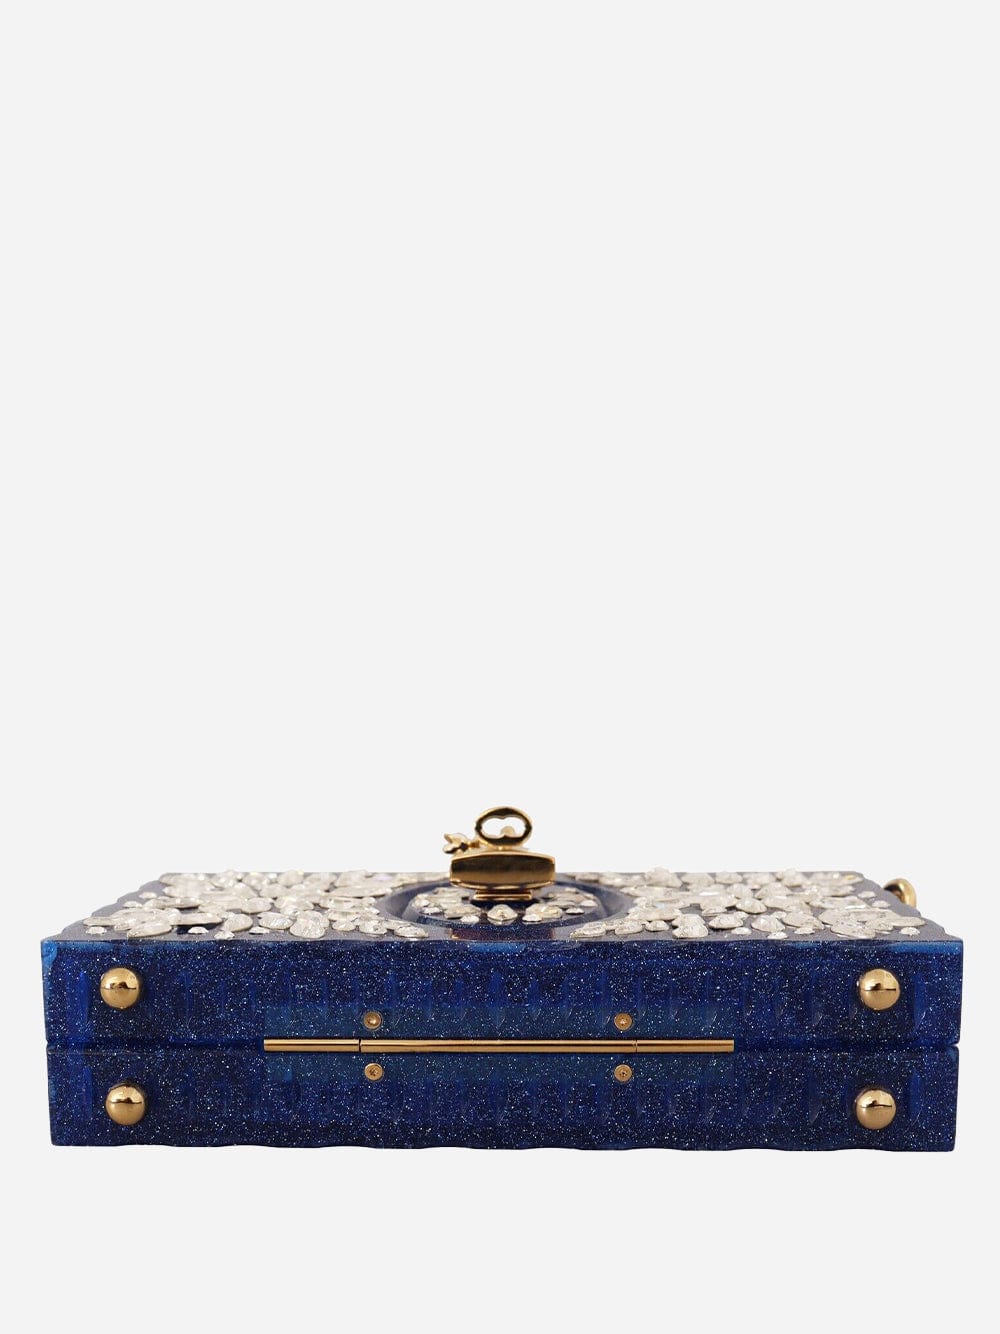 Dolce & Gabbana Crystal-Embellished Box Clutch